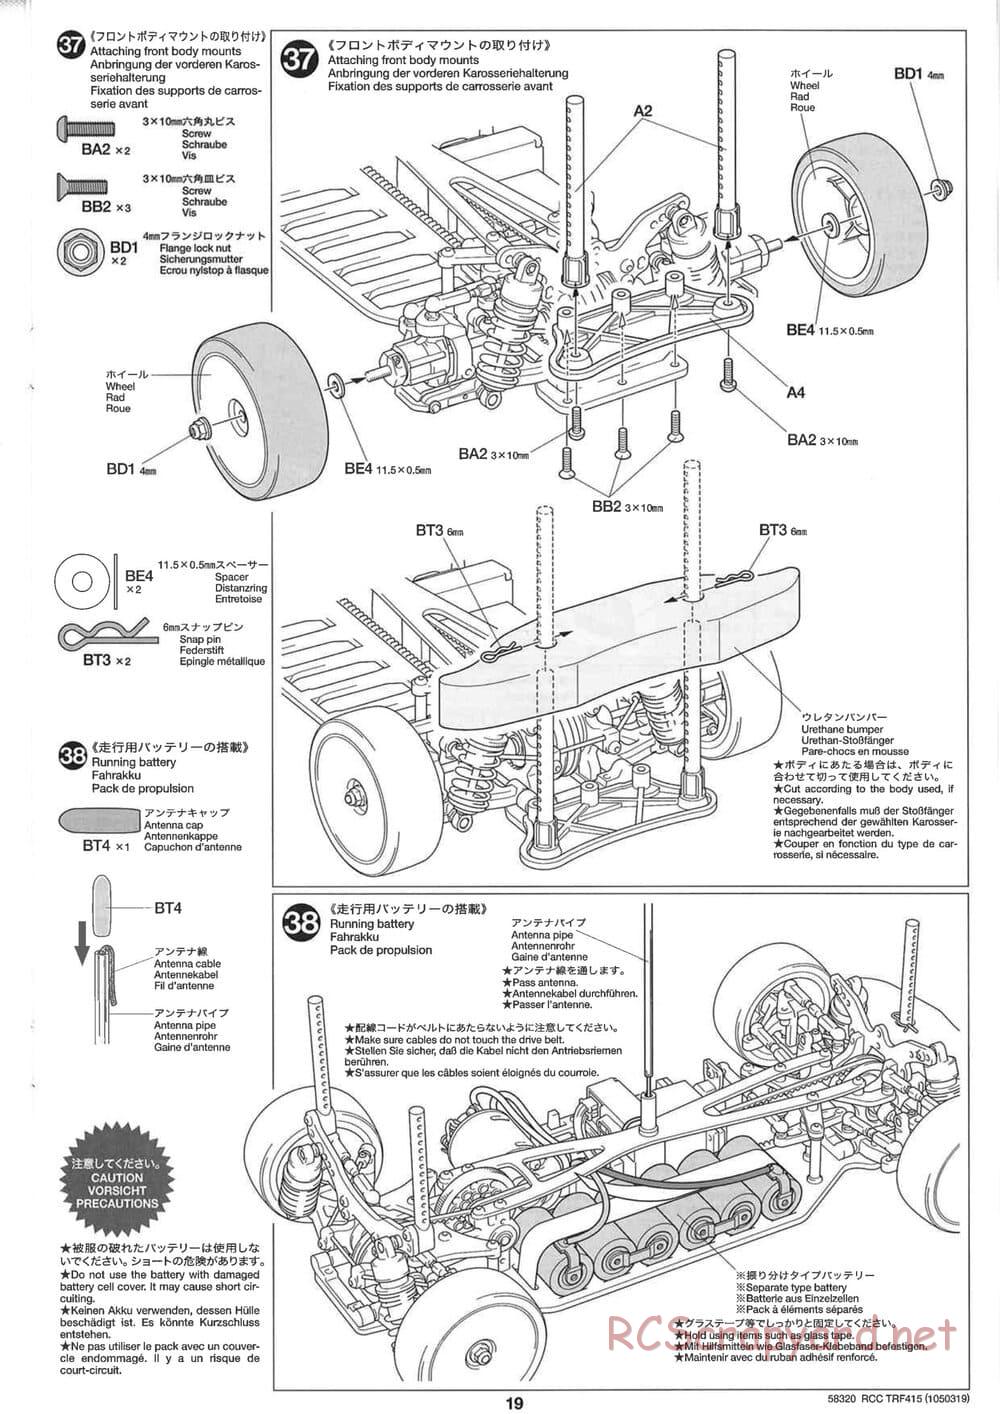 Tamiya - TRF415 Chassis - Manual - Page 19